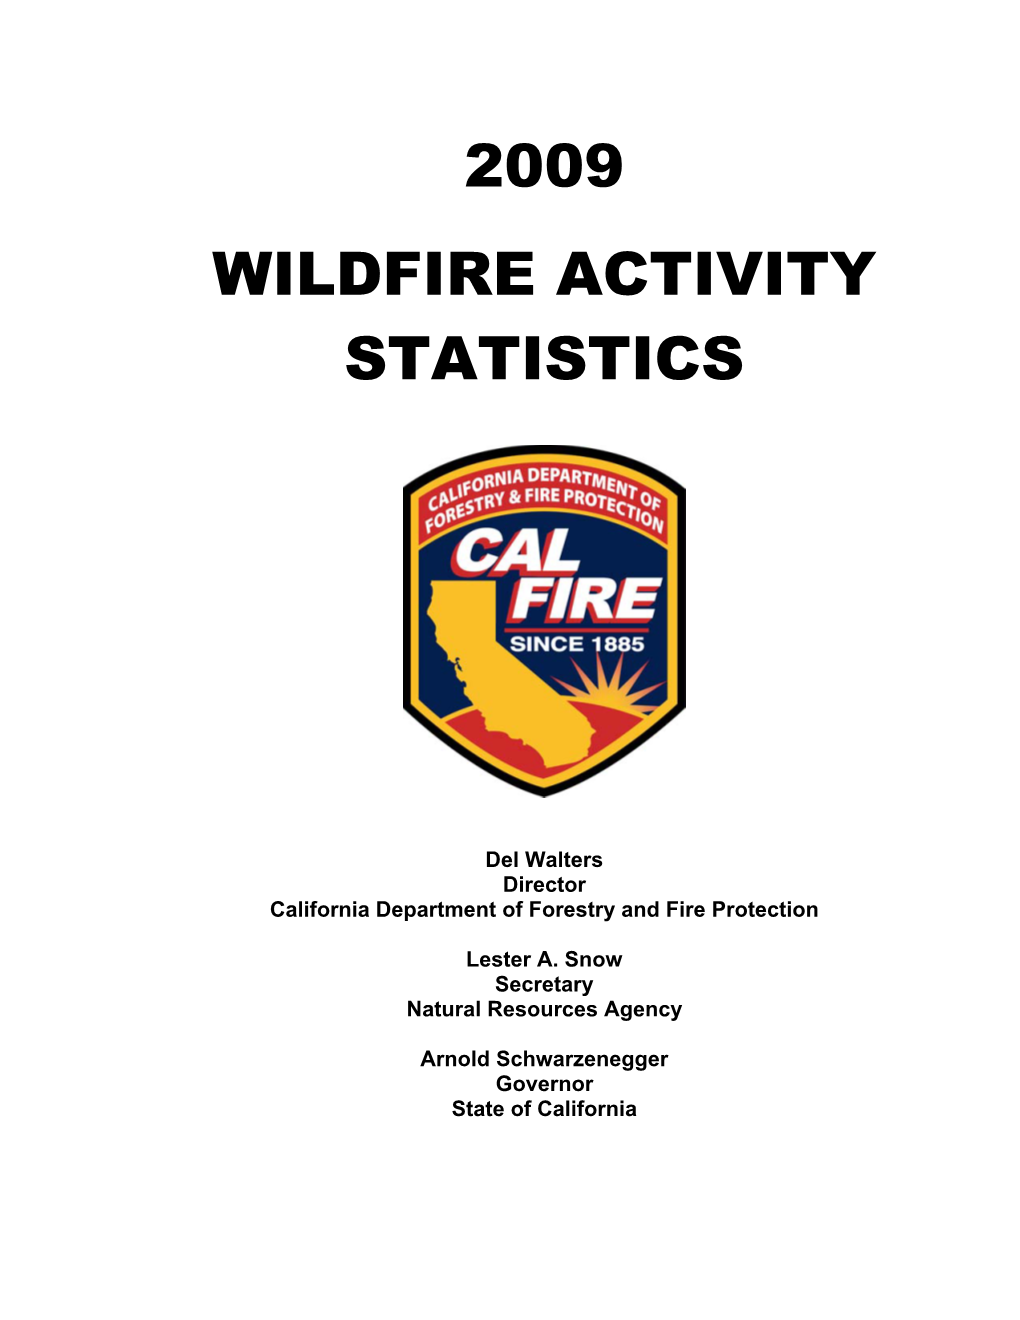 2009 Wildfire Activity Statistics